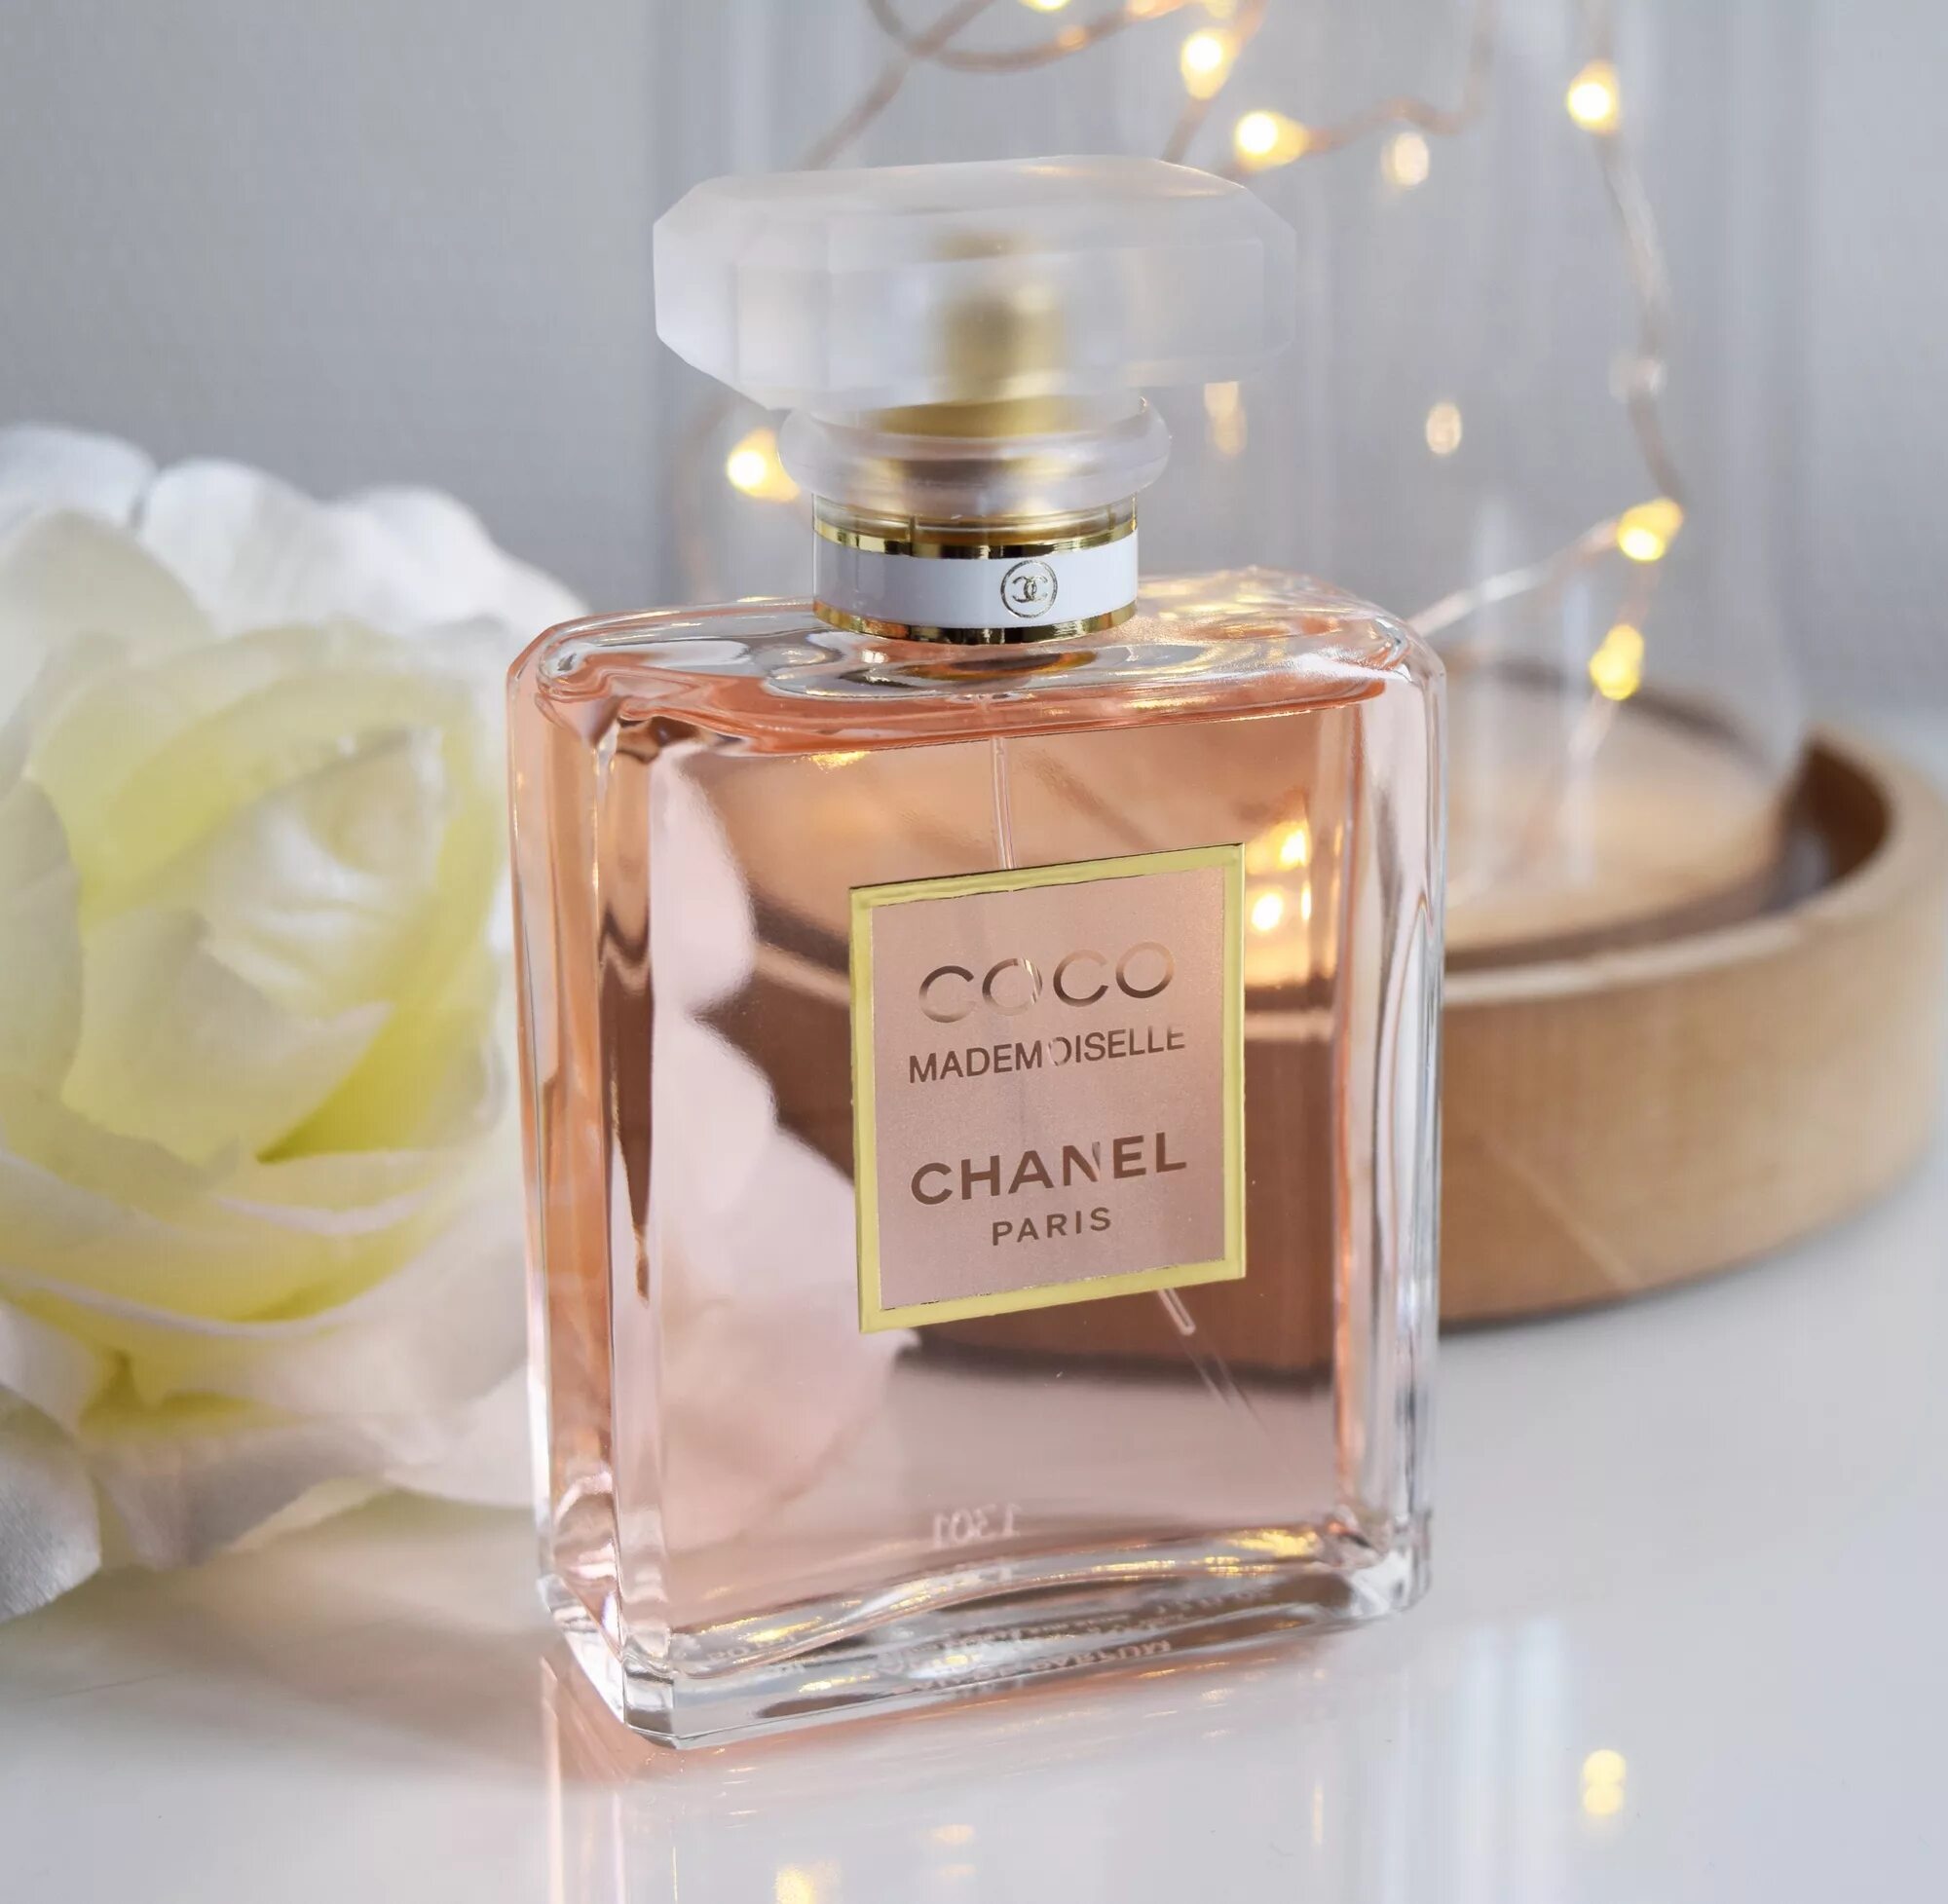 Mademoiselle chanel отзывы. Шанель мадмуазель Парфюм. Coco Mademoiselle Chanel 50 ml. Chanel Coco Mademoiselle EDP 50ml w. Духи "Coco Eau de Parfum Chanel Paris".